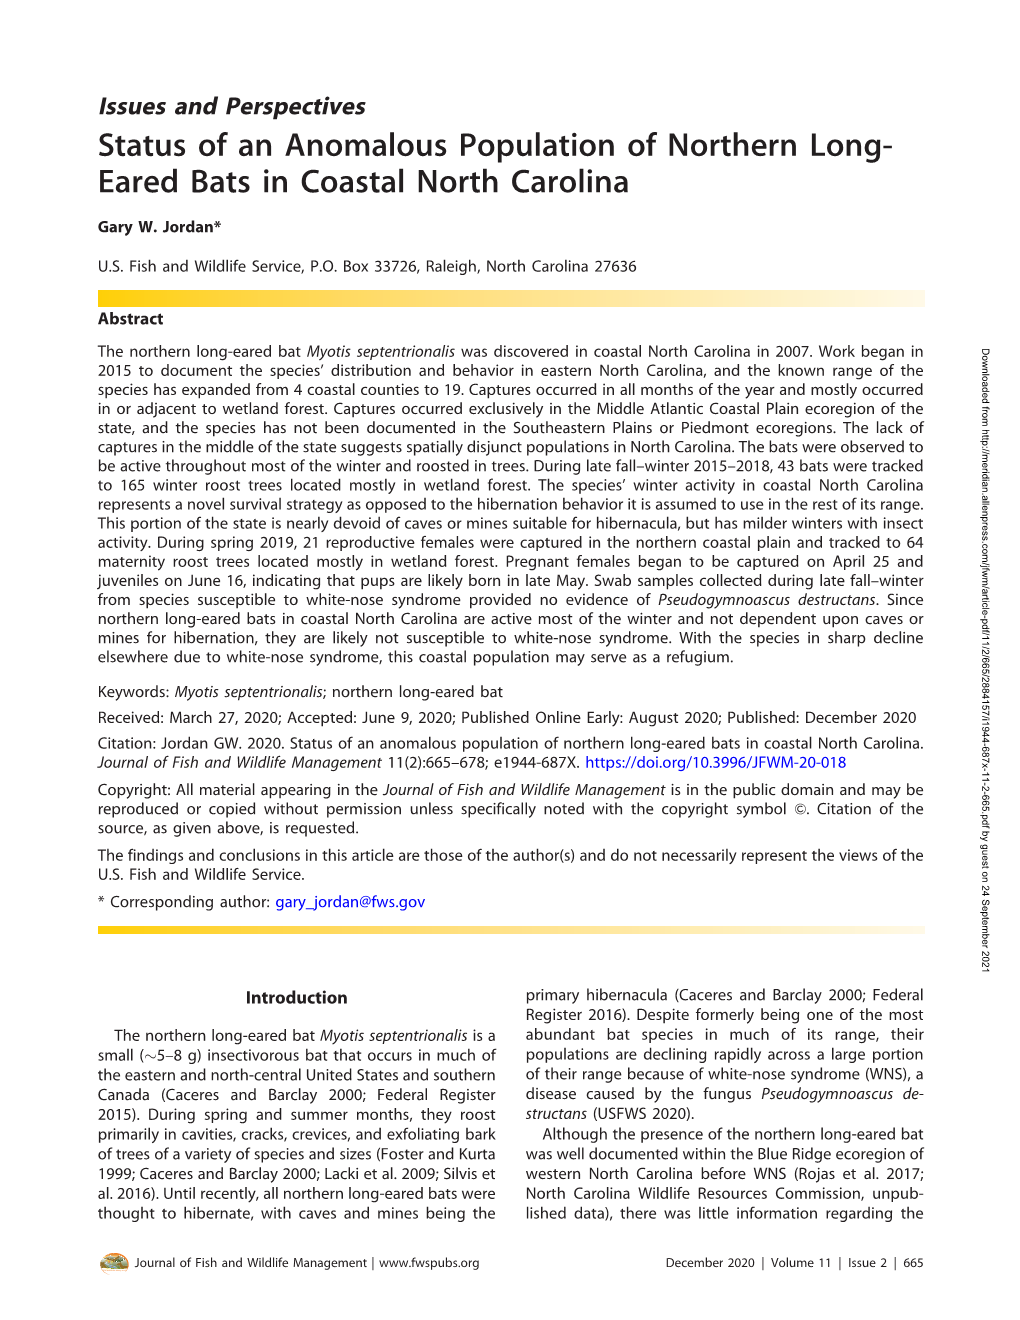 Status of an Anomalous Population of Northern Long- Eared Bats in Coastal North Carolina